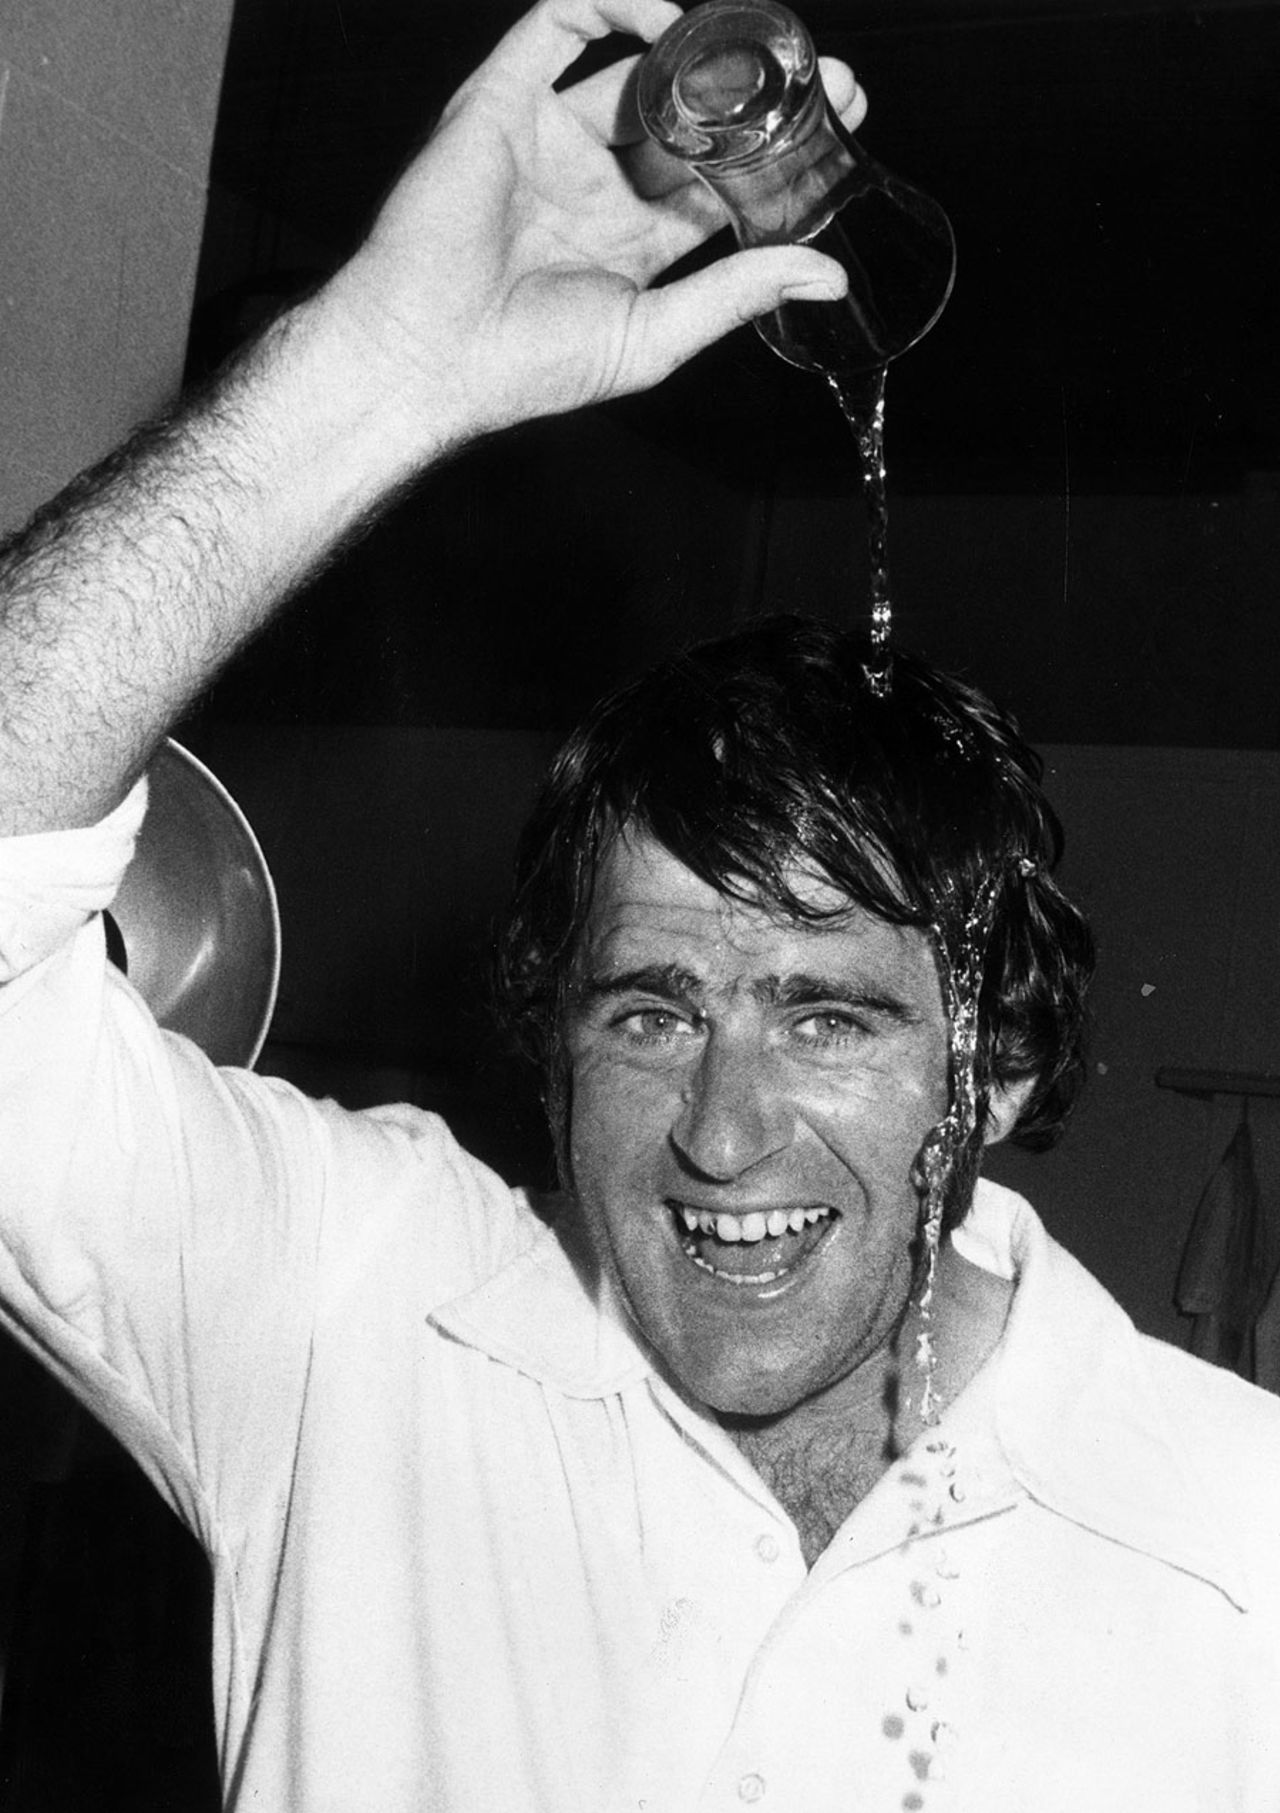 Terry Jenner celebrates after a match, 1975